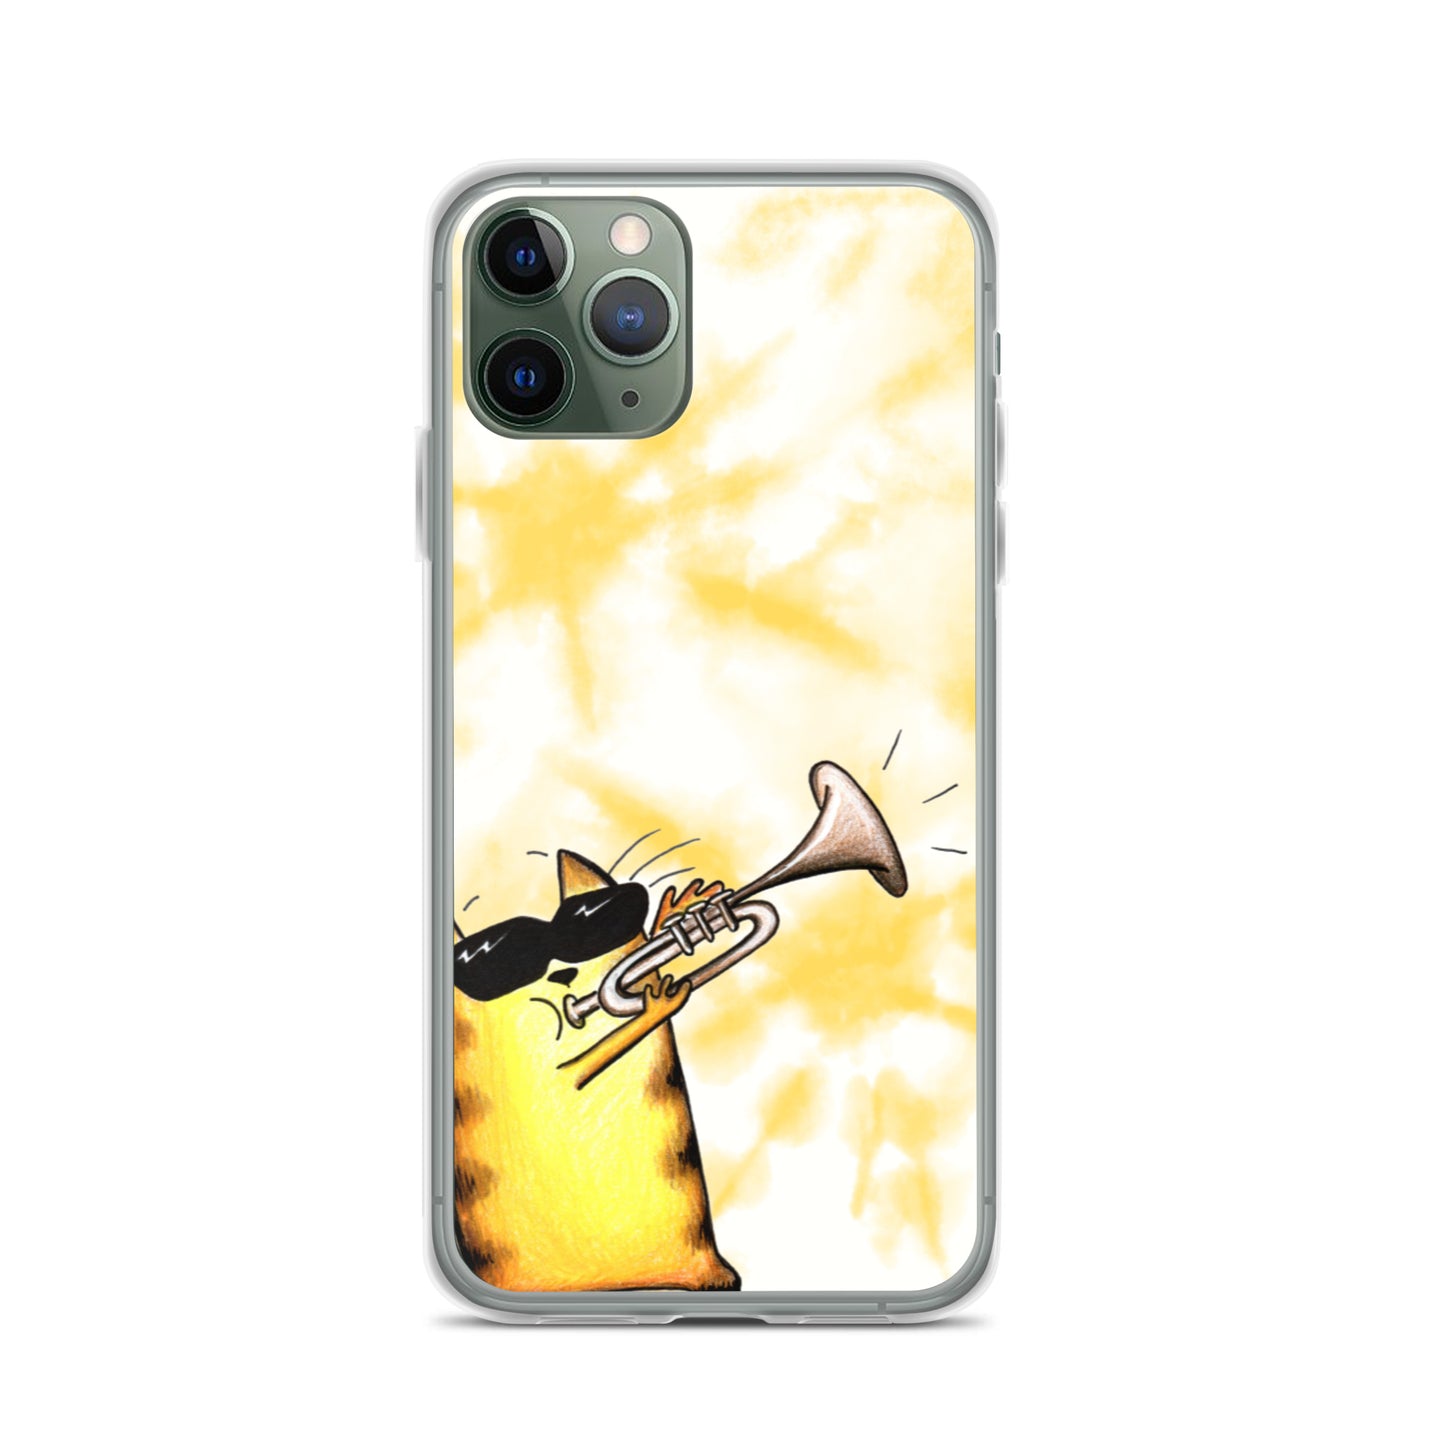 flexible yellow batik Iphone 11 pro case with cat plying trombone print